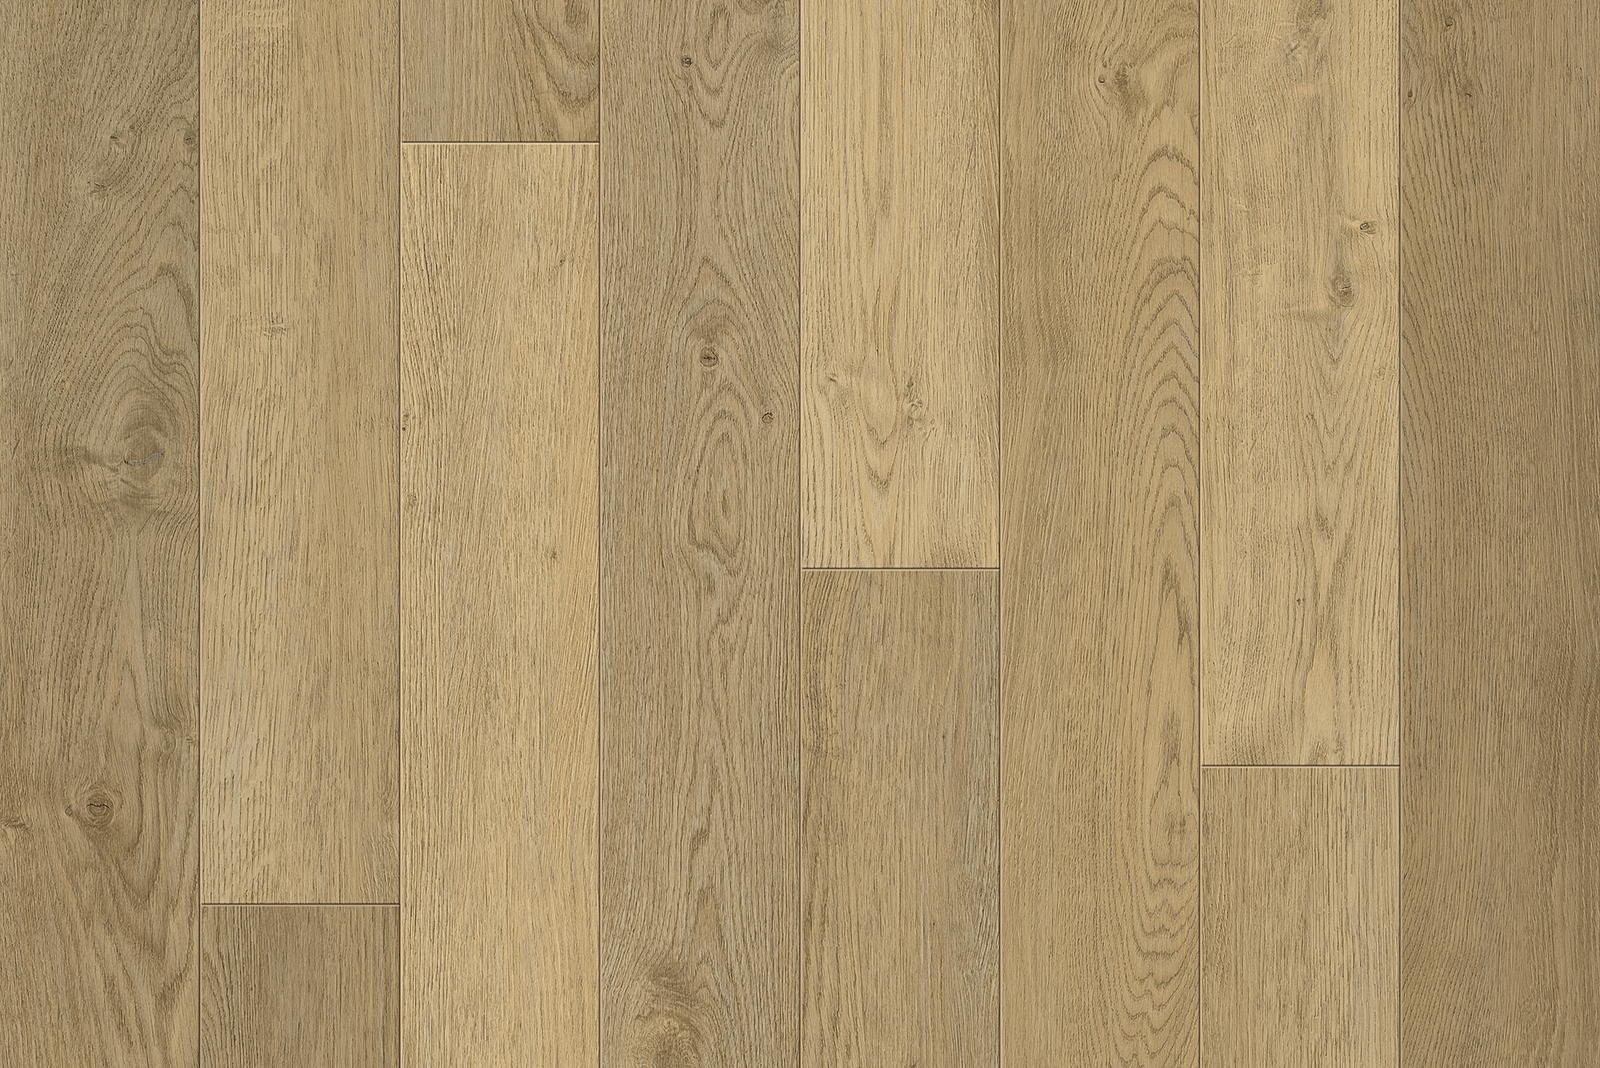 The Garrison Collection: Fine Hardwood Flooring